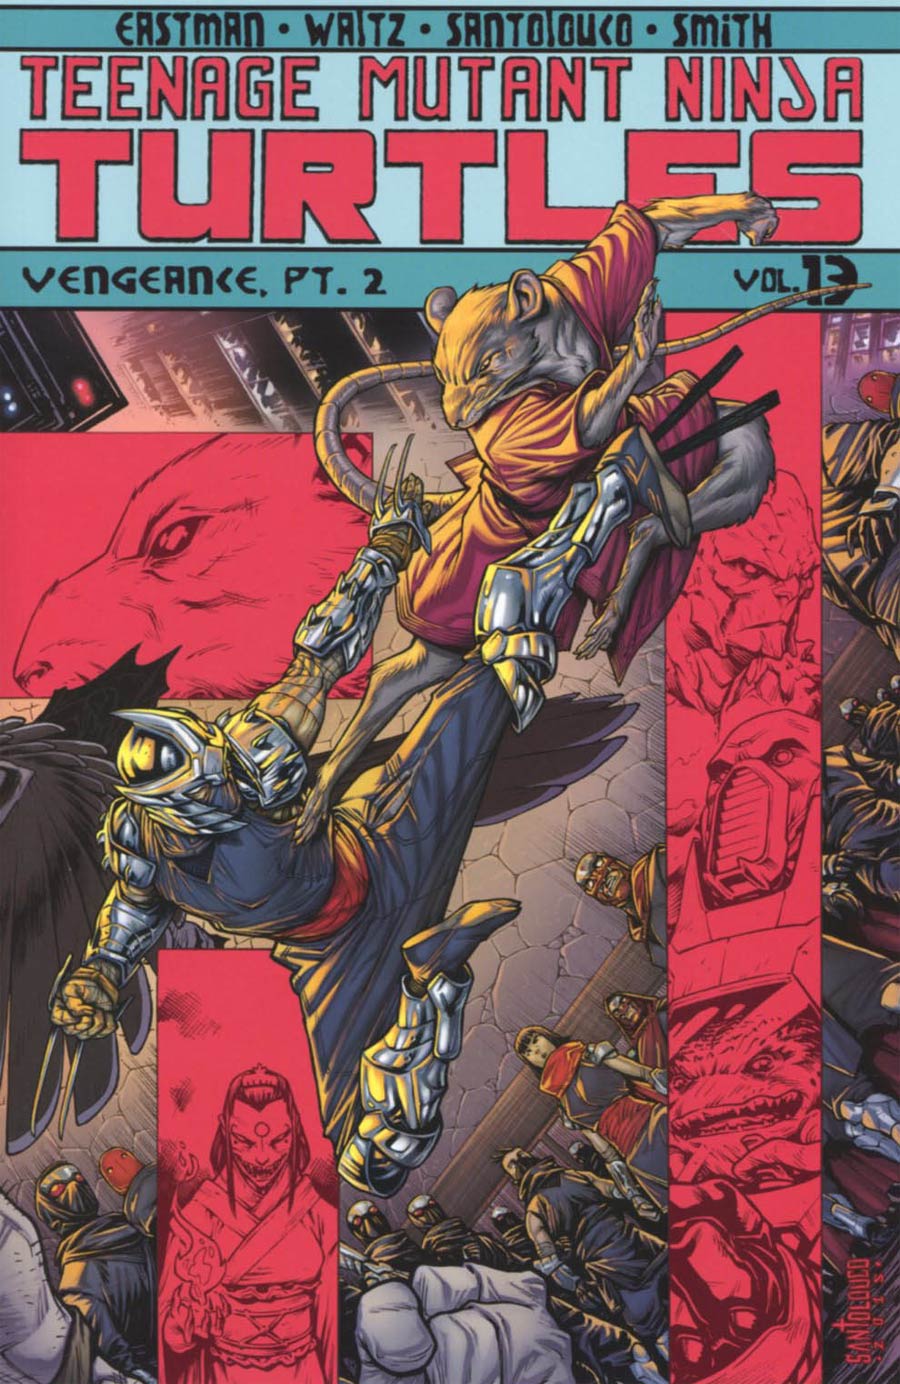 Teenage Mutant Ninja Turtles Ongoing Vol 13 Vengeance Part 2 TP